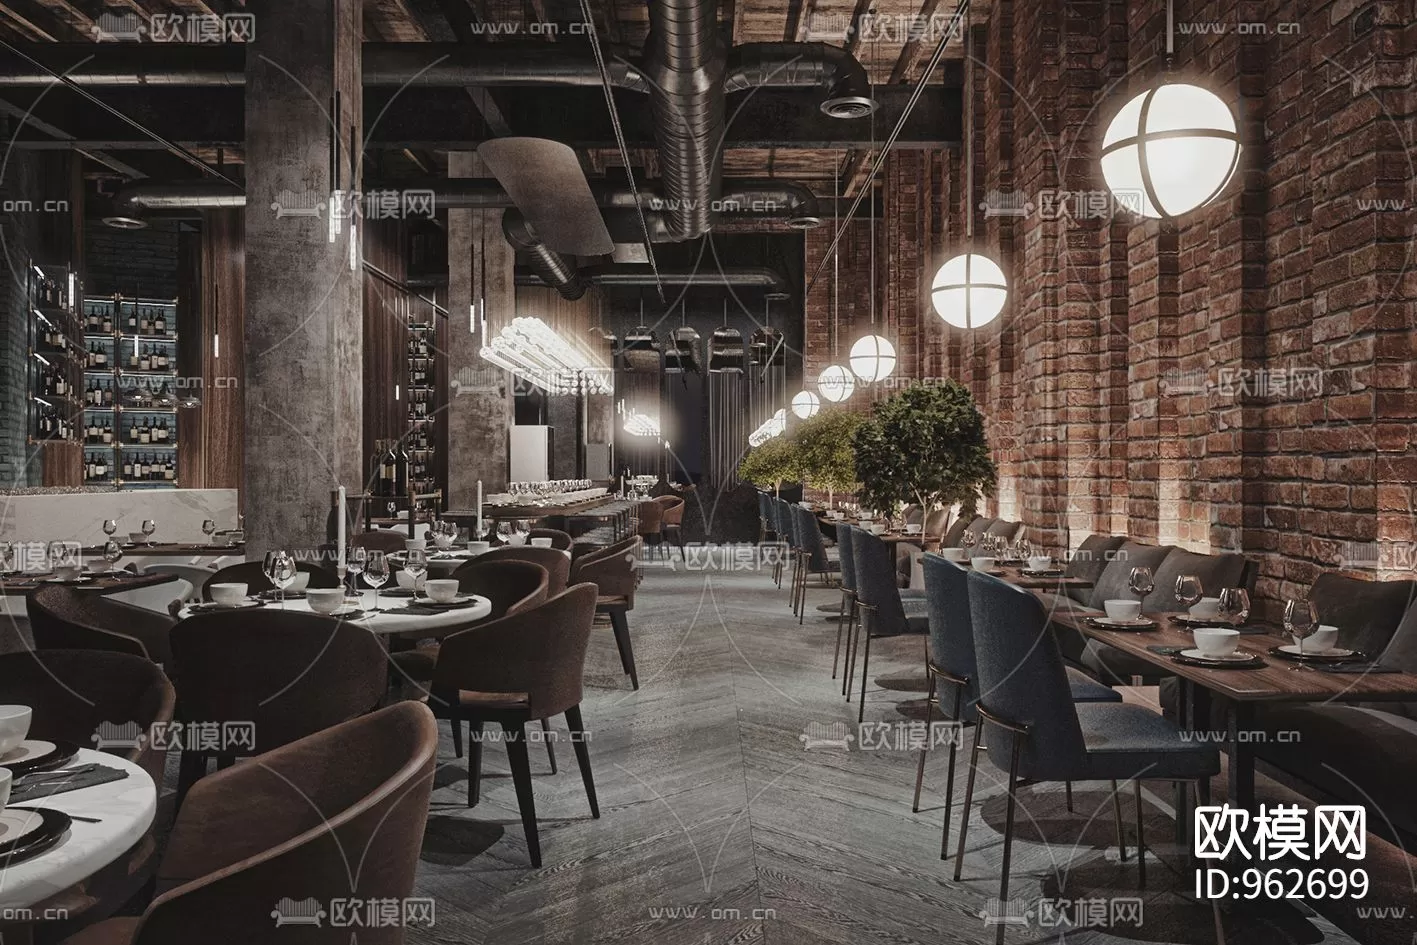 Restaurant 3D Scenes – 0736